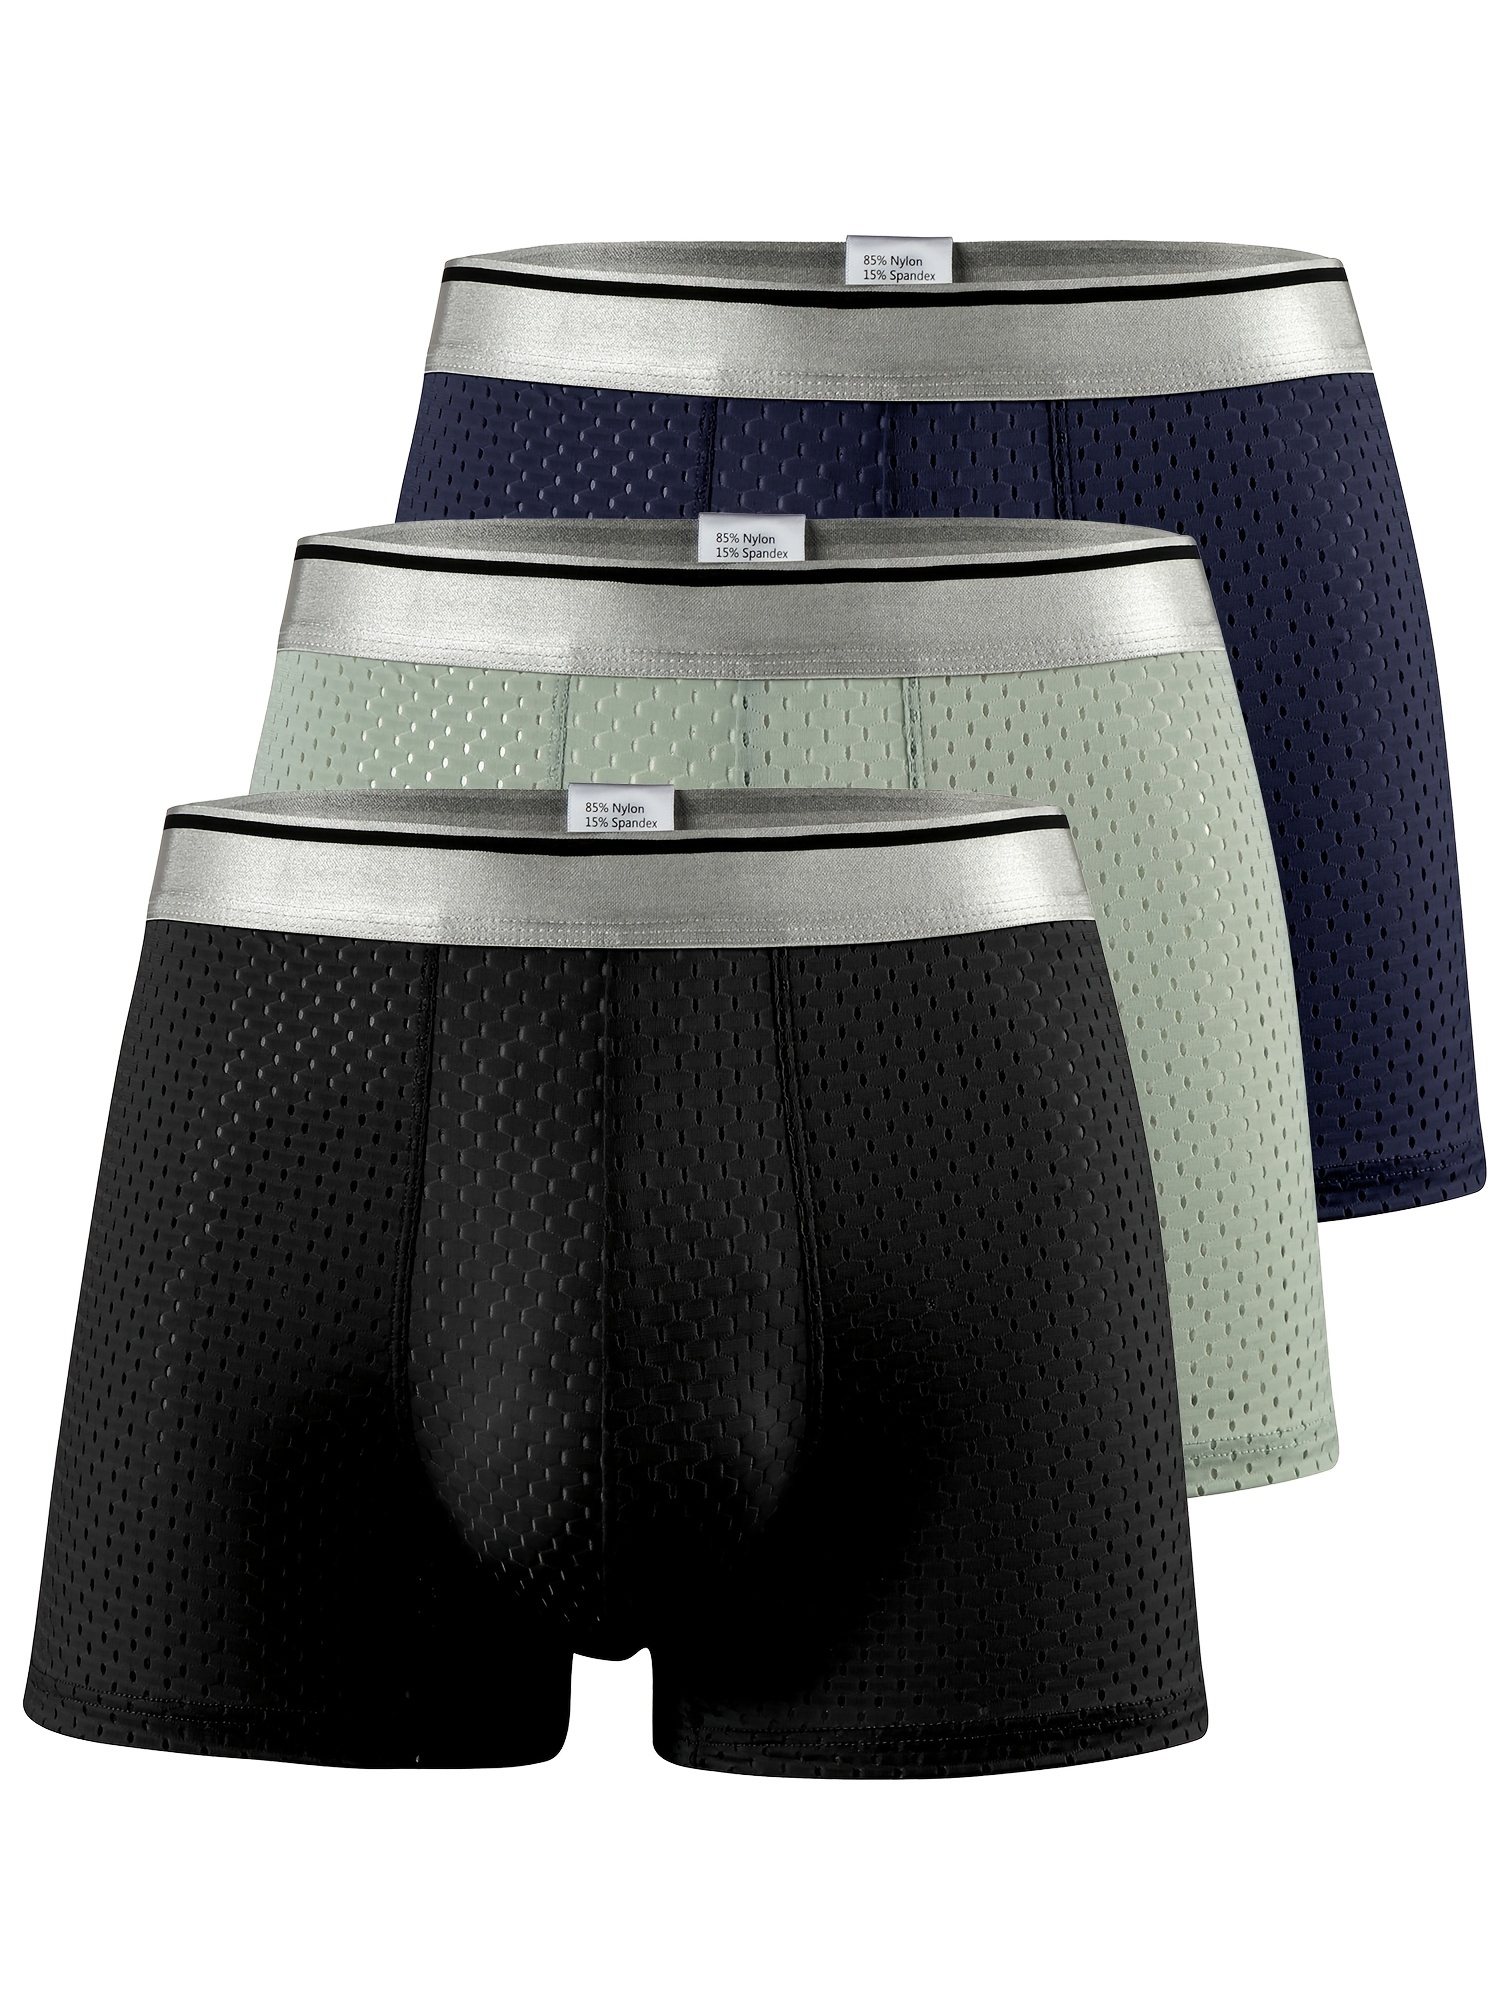 Big & Tall Underwear: Tall Briefs for Men